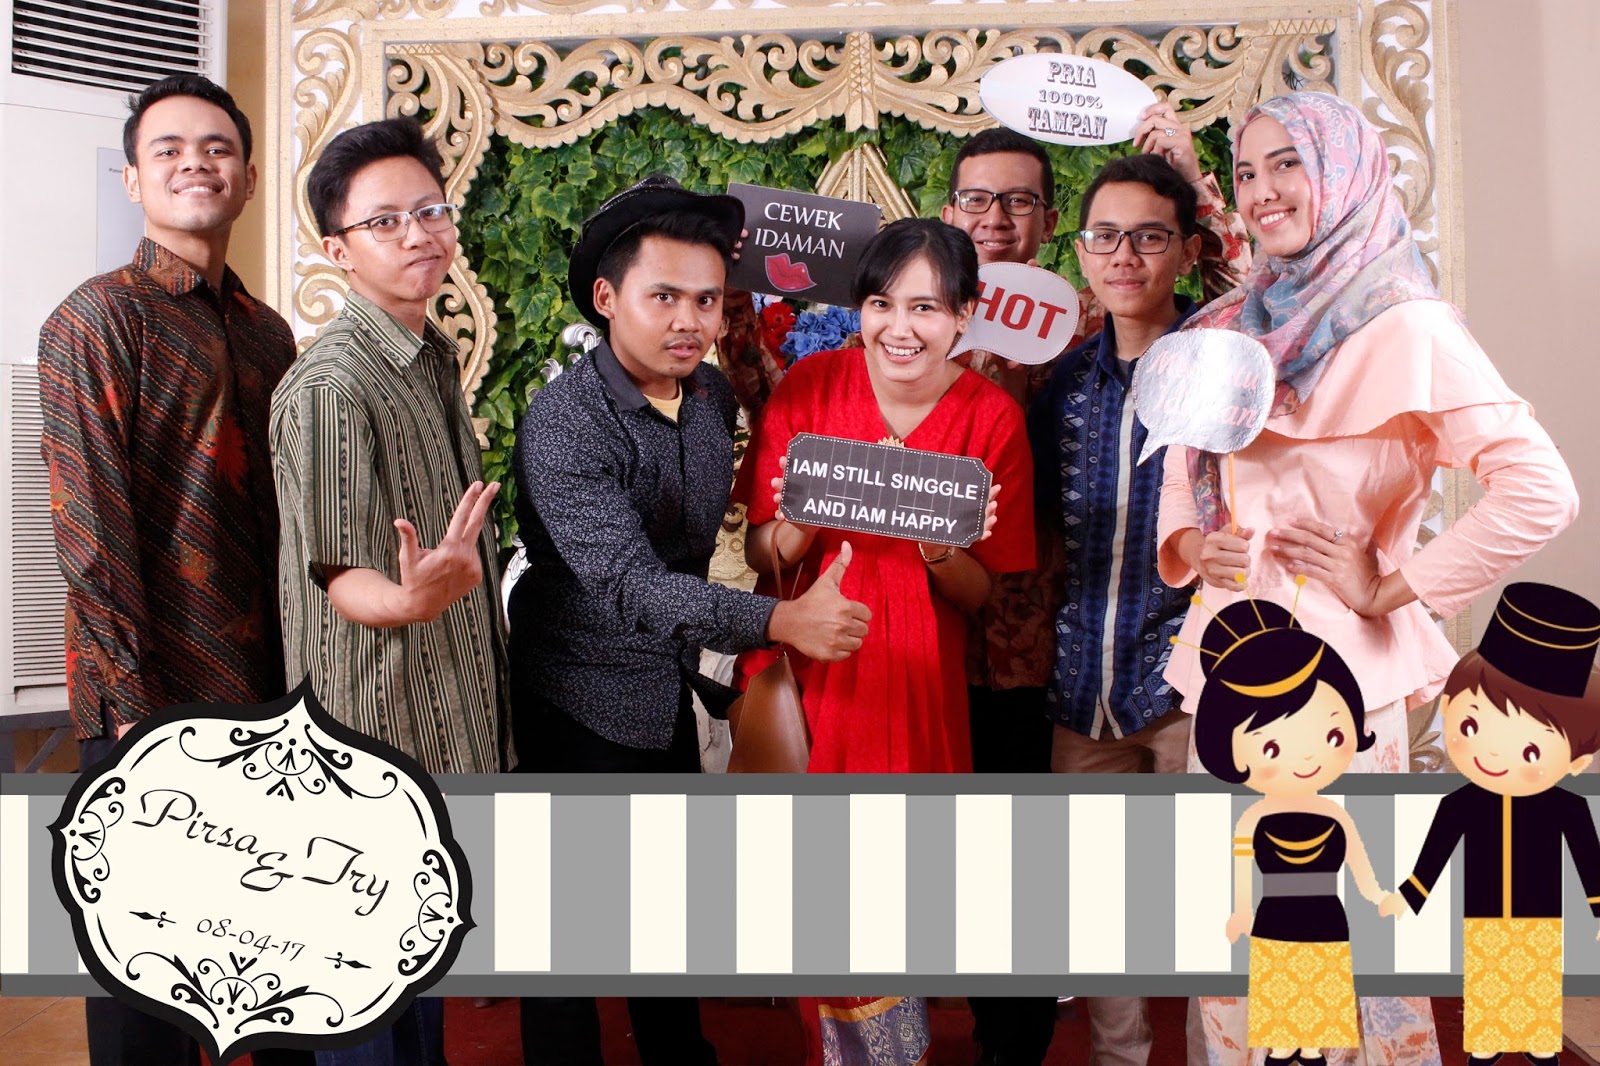 +0856-4020-3369 ; Jasa Photobooth Semarang ~Wedding Pirsa & Try~